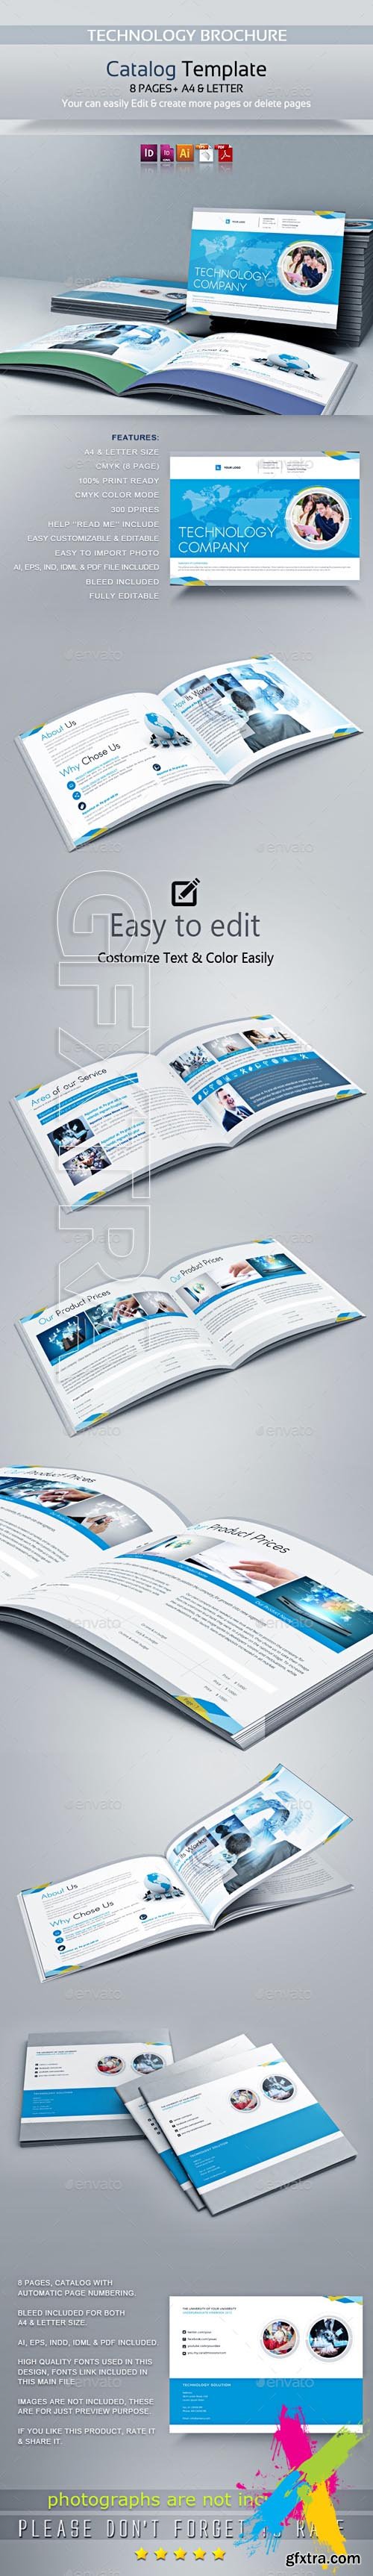 Graphicriver - Technology Brochure Catalog 20214890